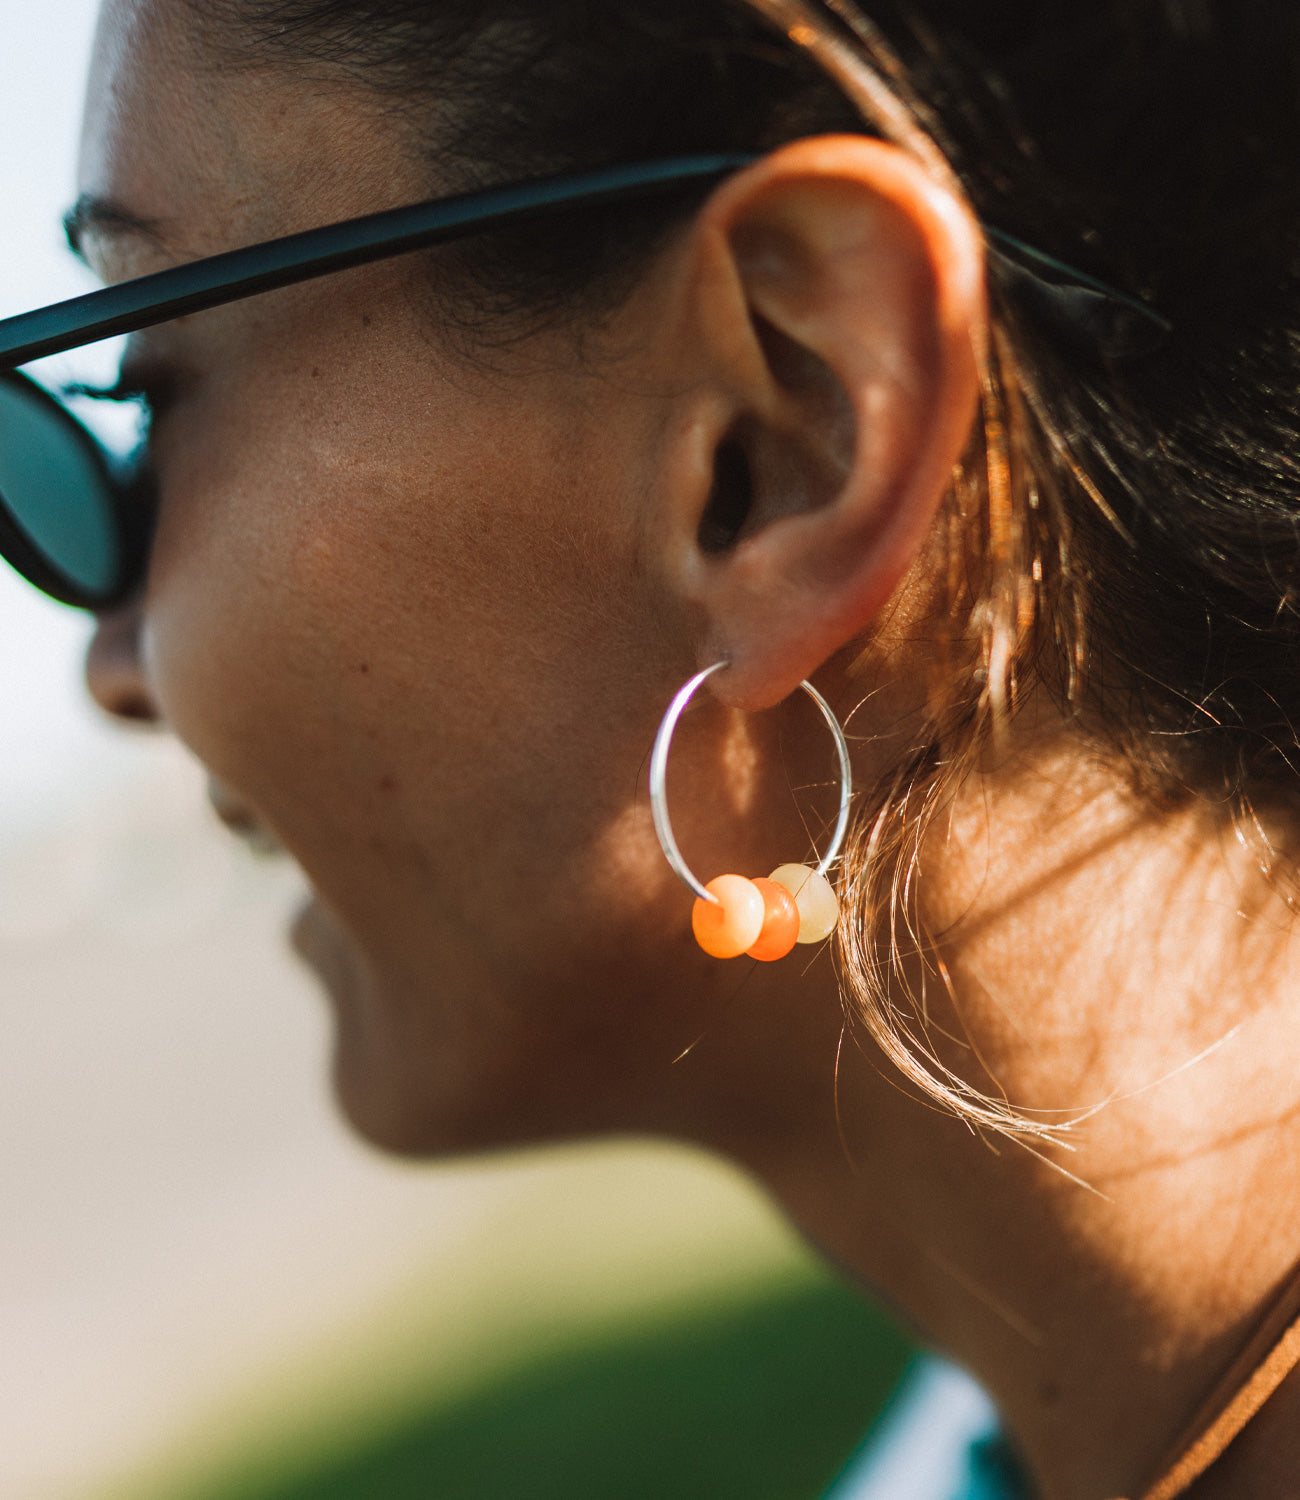 Orange and green beads on silver hoop earrings worn by woman wearing sunglasses.